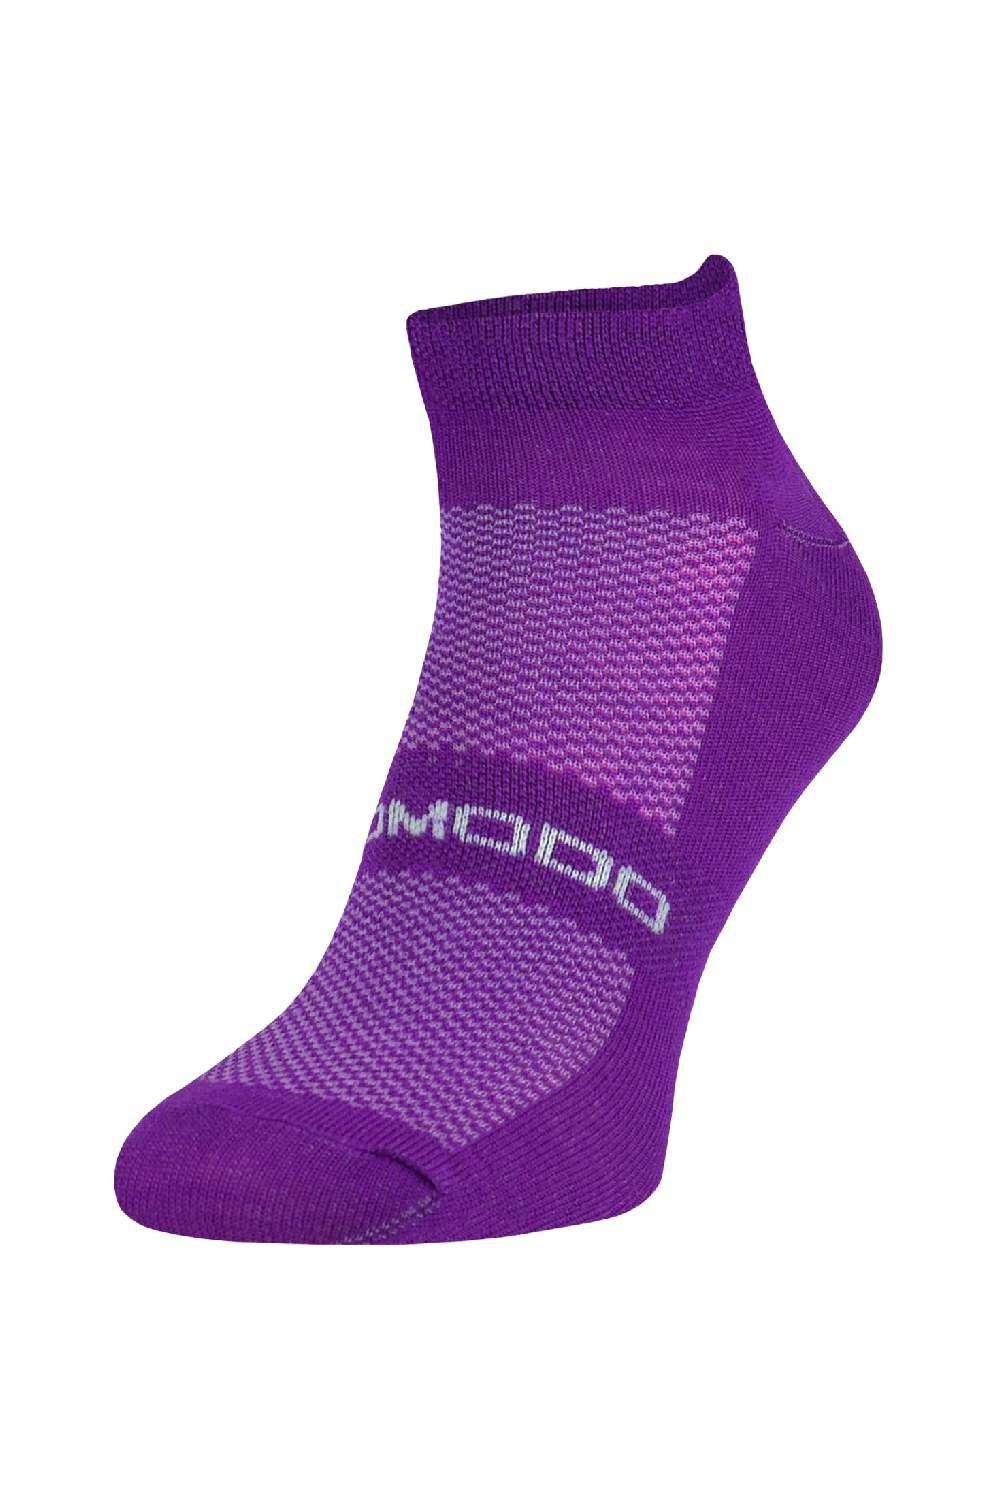 Merino Wool Running Socks - Lightweight Cushioned Sport Socks